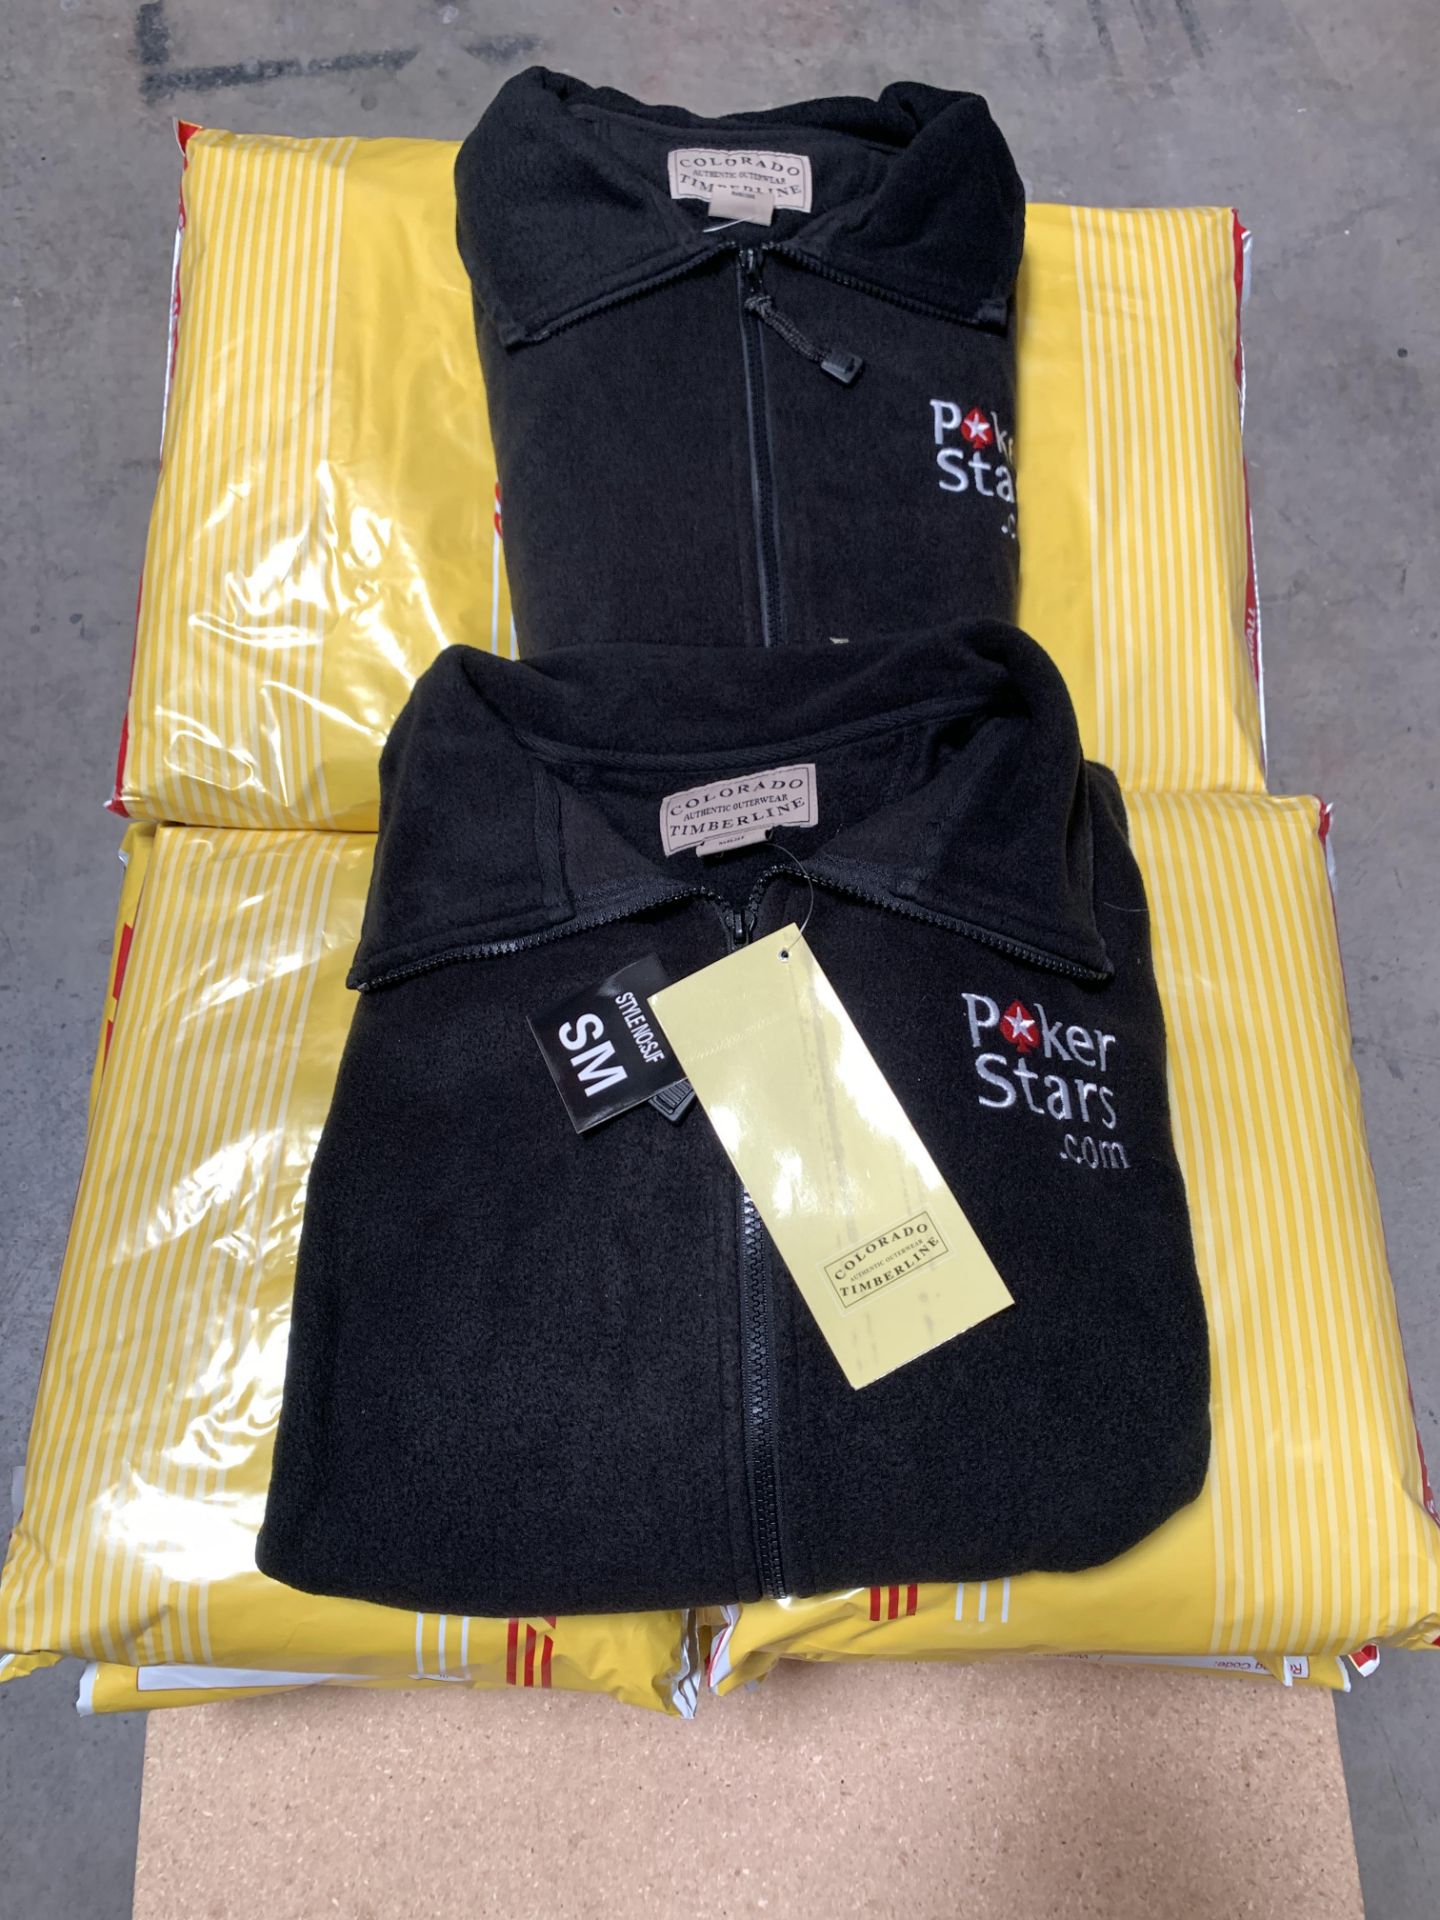 21 Fleece Men's Zip-Up Jackets, Colorado Timberline Brand Authentic Outerwear, Small